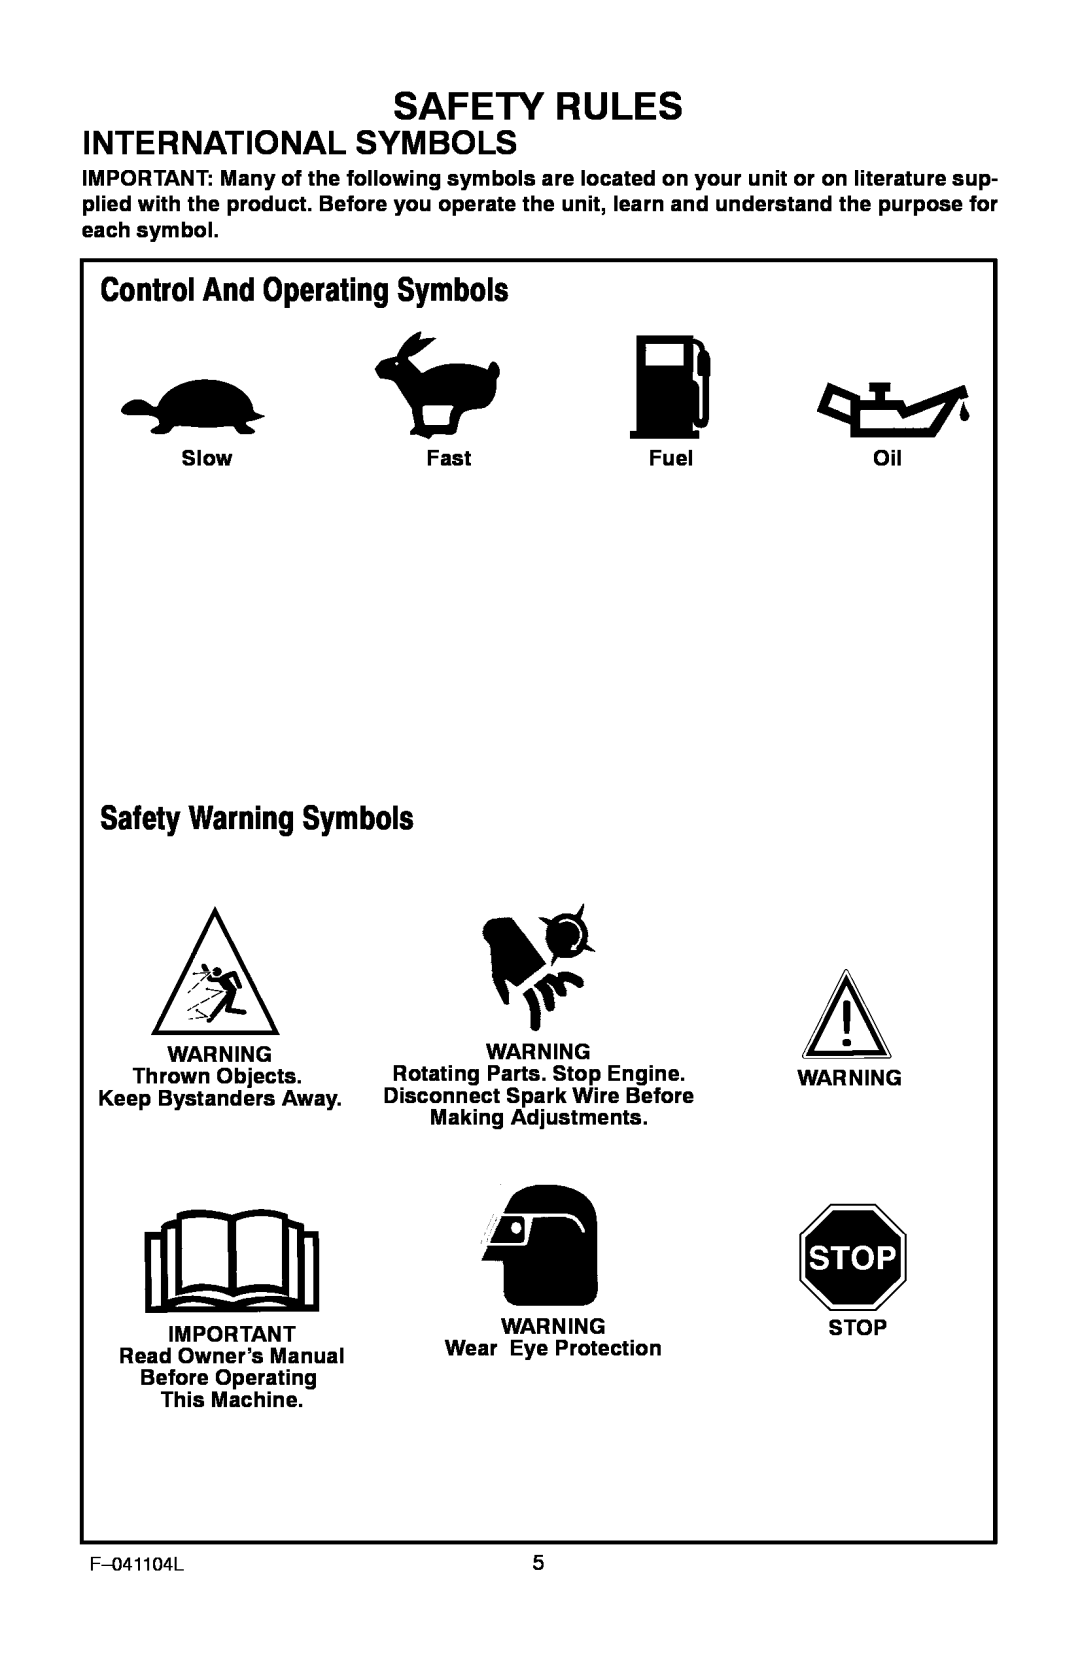 Murray EV3850x4B 3.8 International Symbols, Safety Rules, Control And Operating Symbols, Safety Warning Symbols 